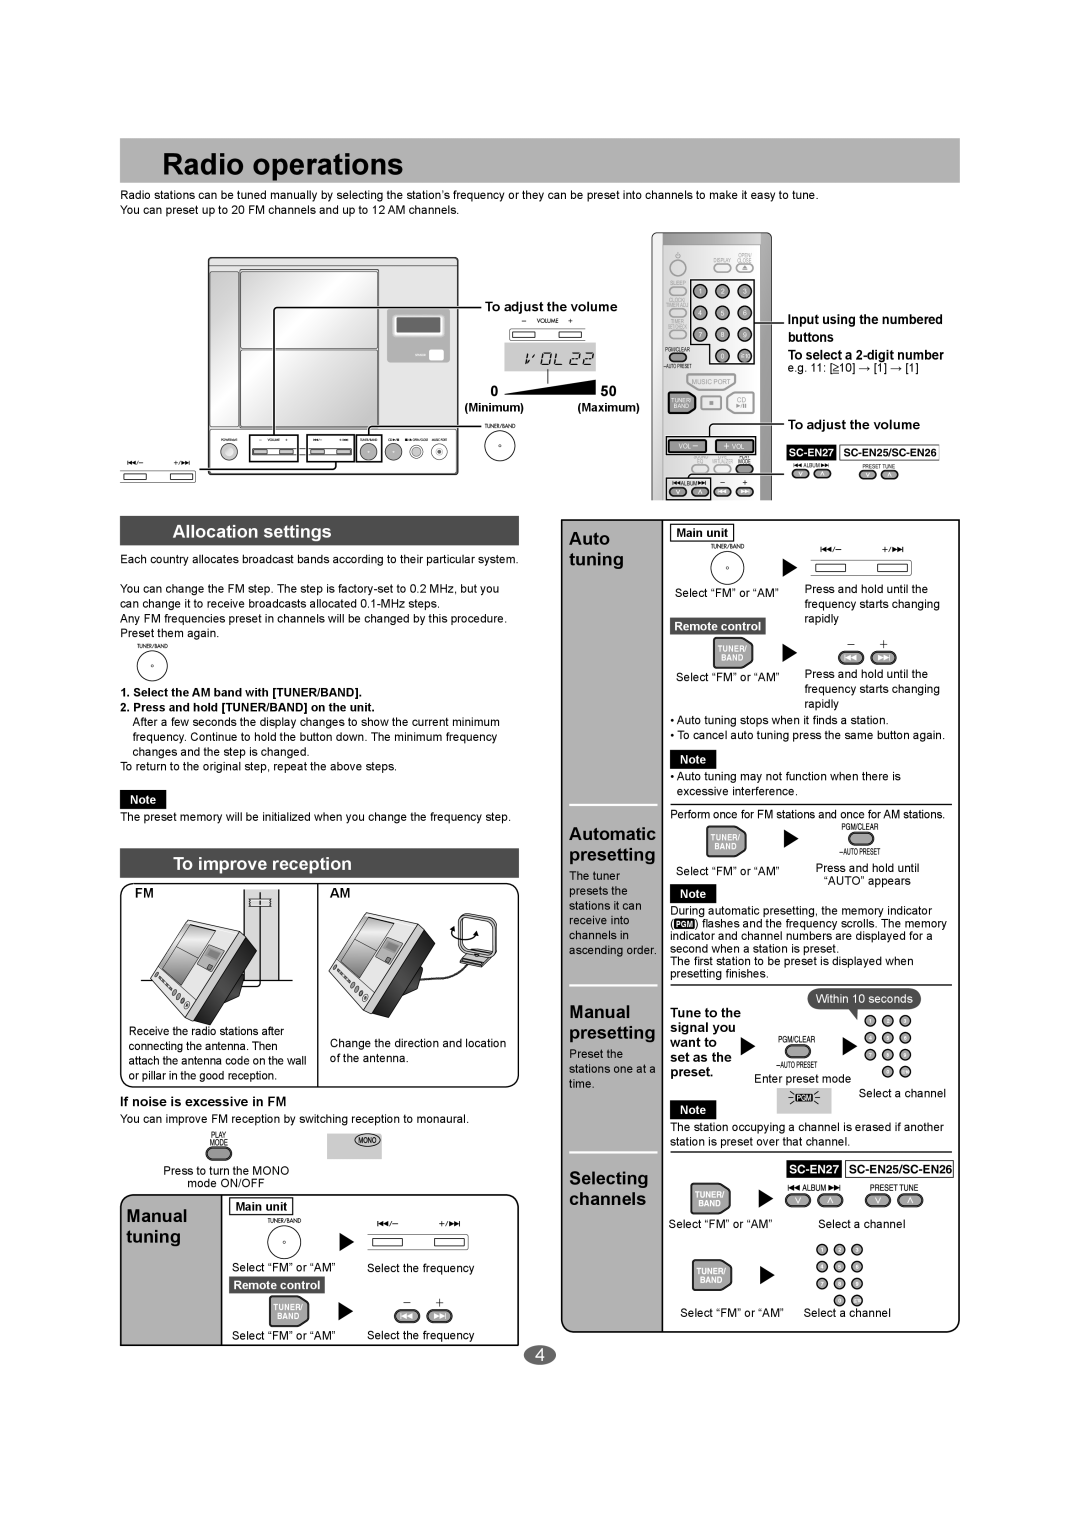 Panasonic SC-EN27 Radio operations, tuning, Automatic presetting, Manual presetting, Selecting channels, e.g, Maximum 